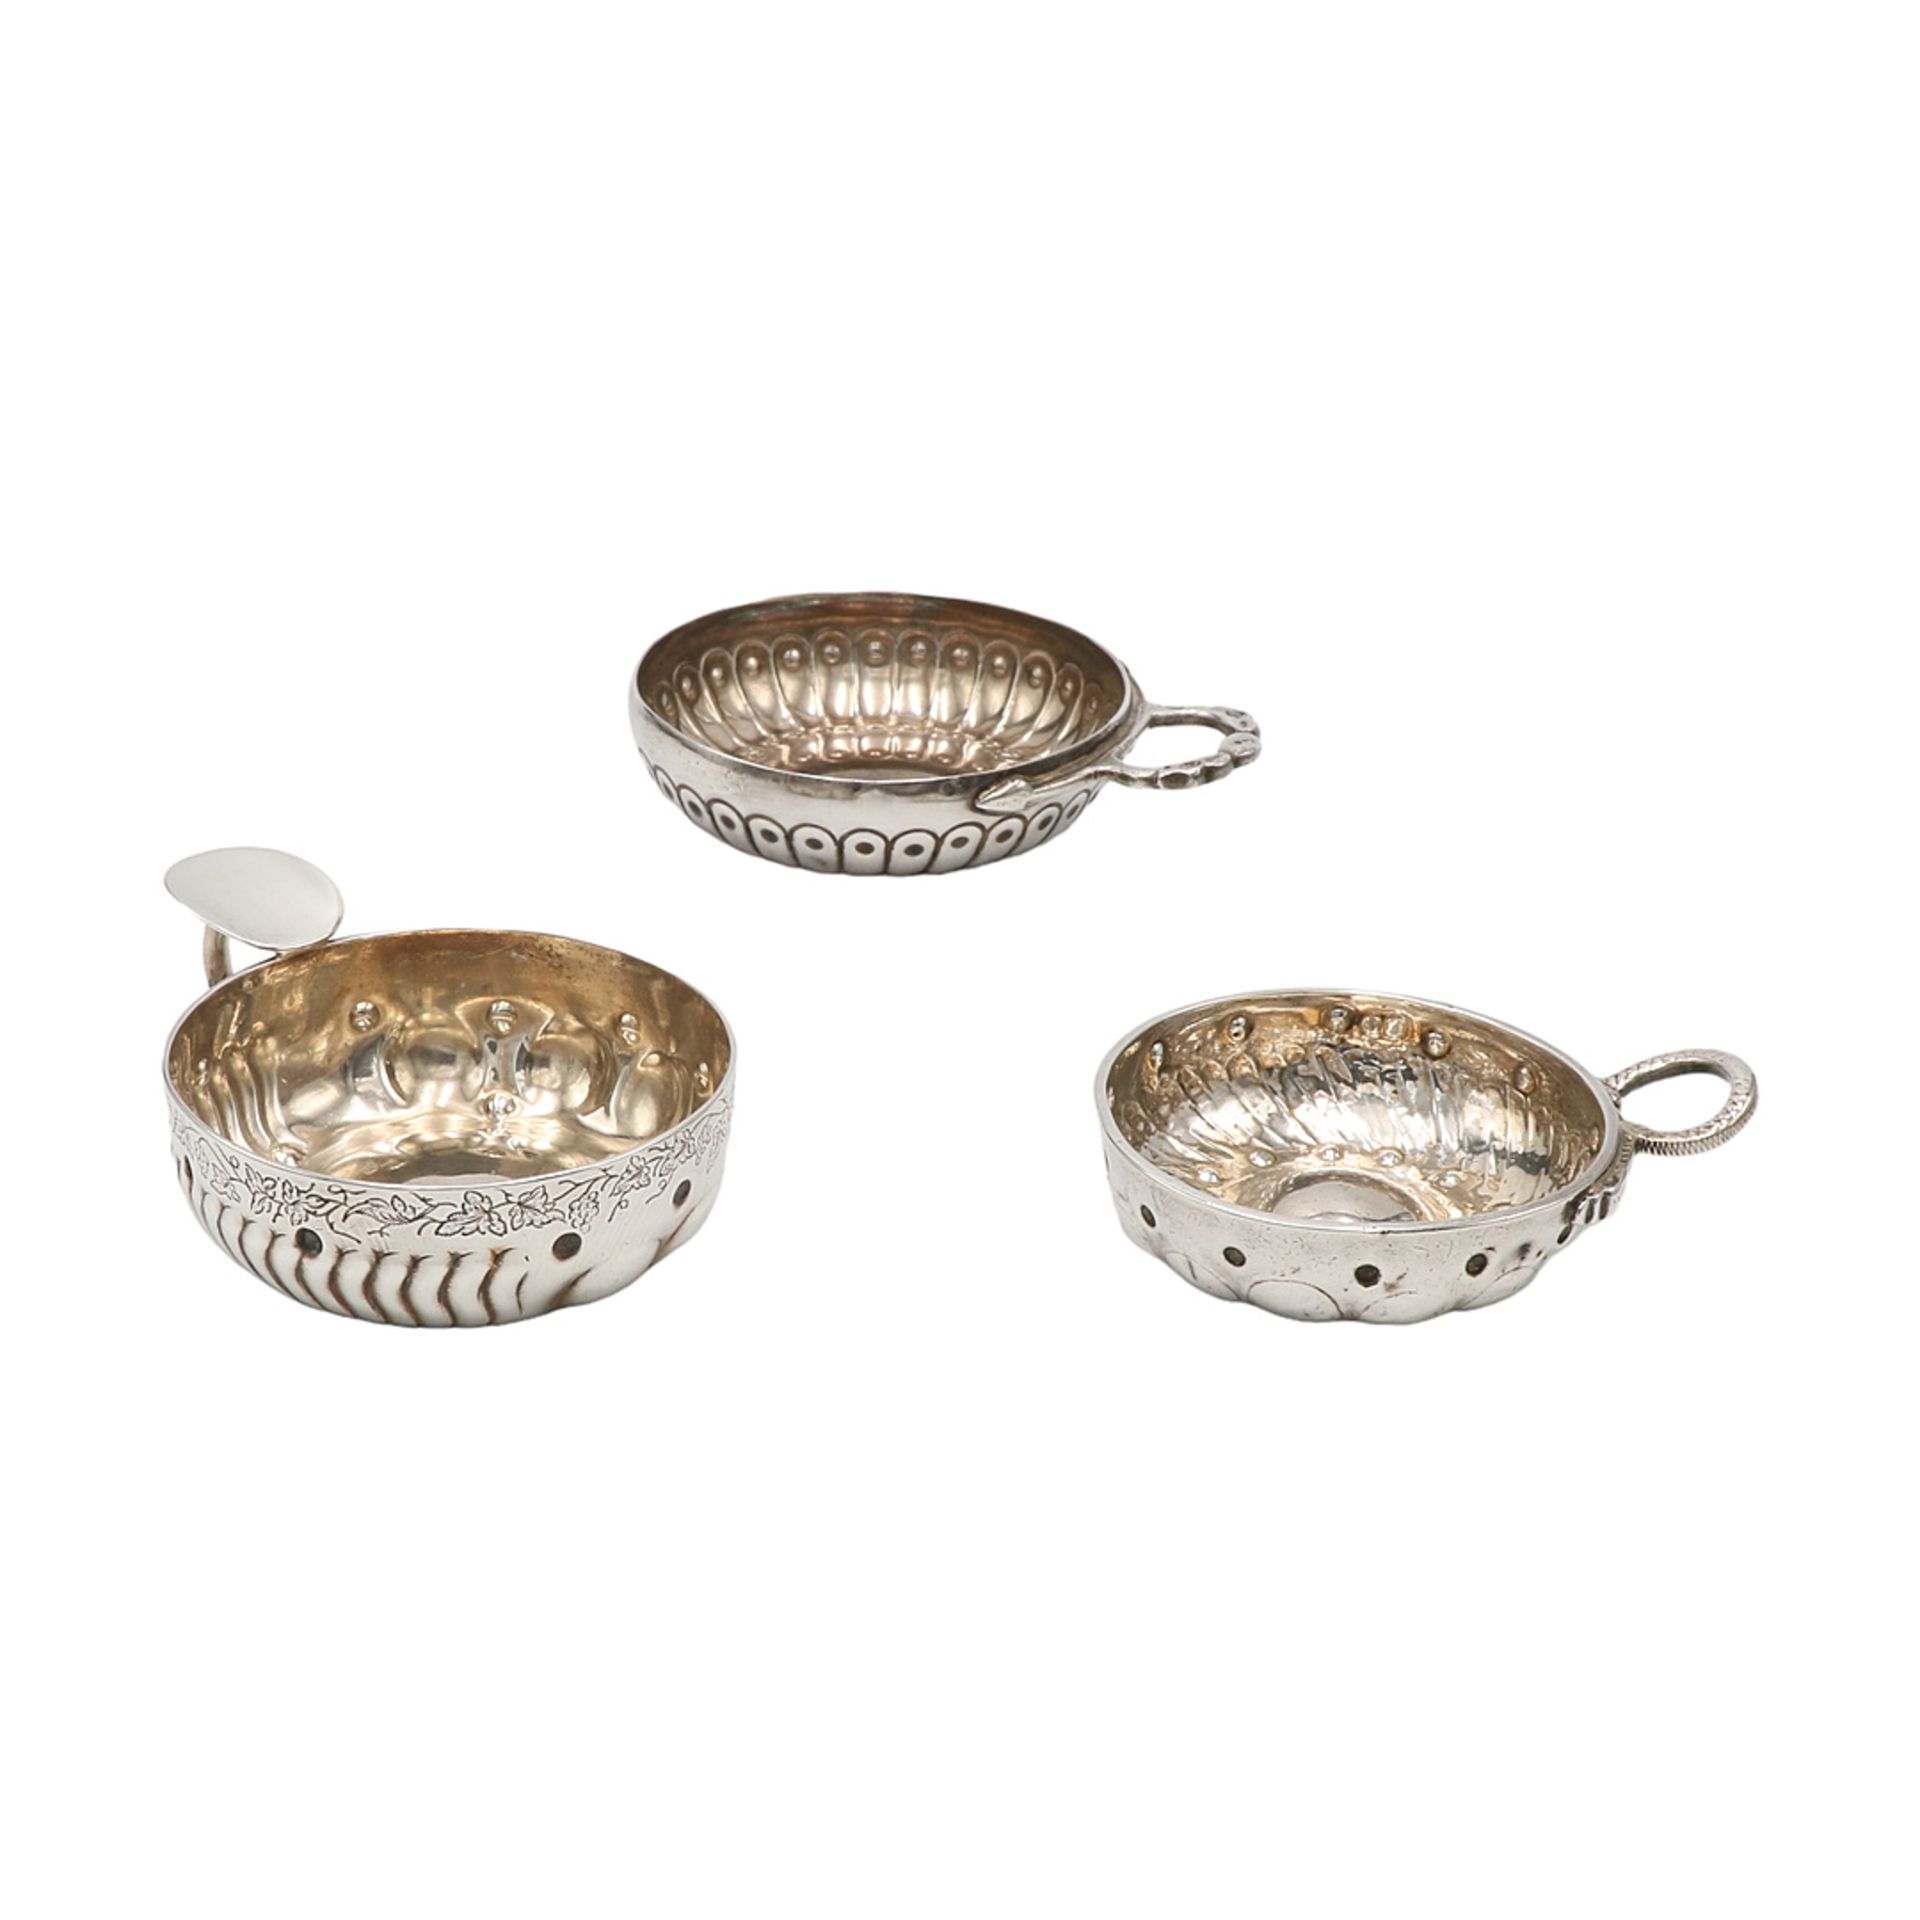 Three wine tasting bowls, France, 18th/19th century - Image 2 of 5